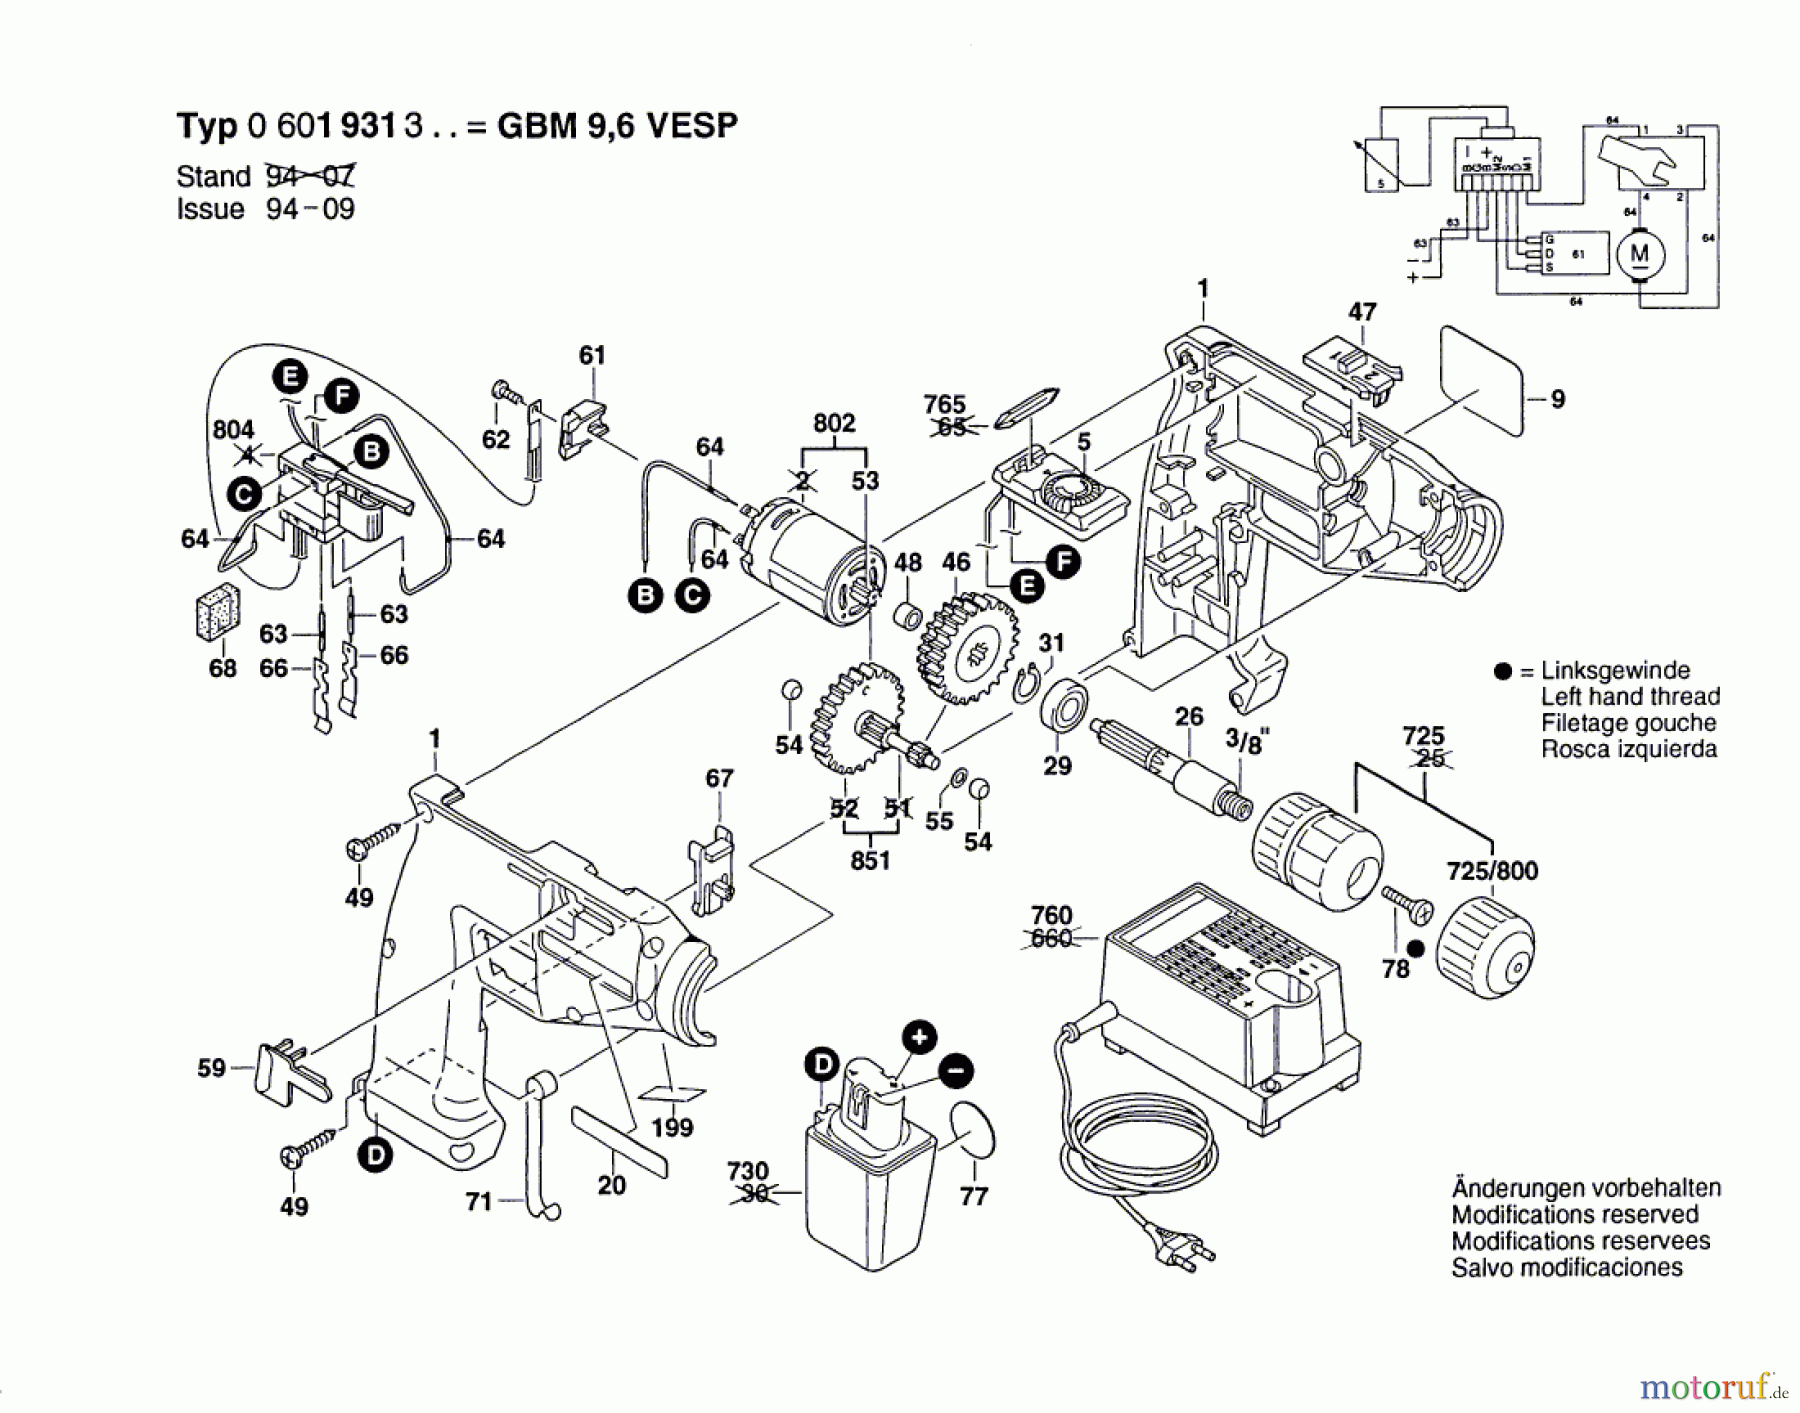  Bosch Akku Werkzeug Gw-Akku-Bohrmaschine GBM 9,6V VESP Seite 1